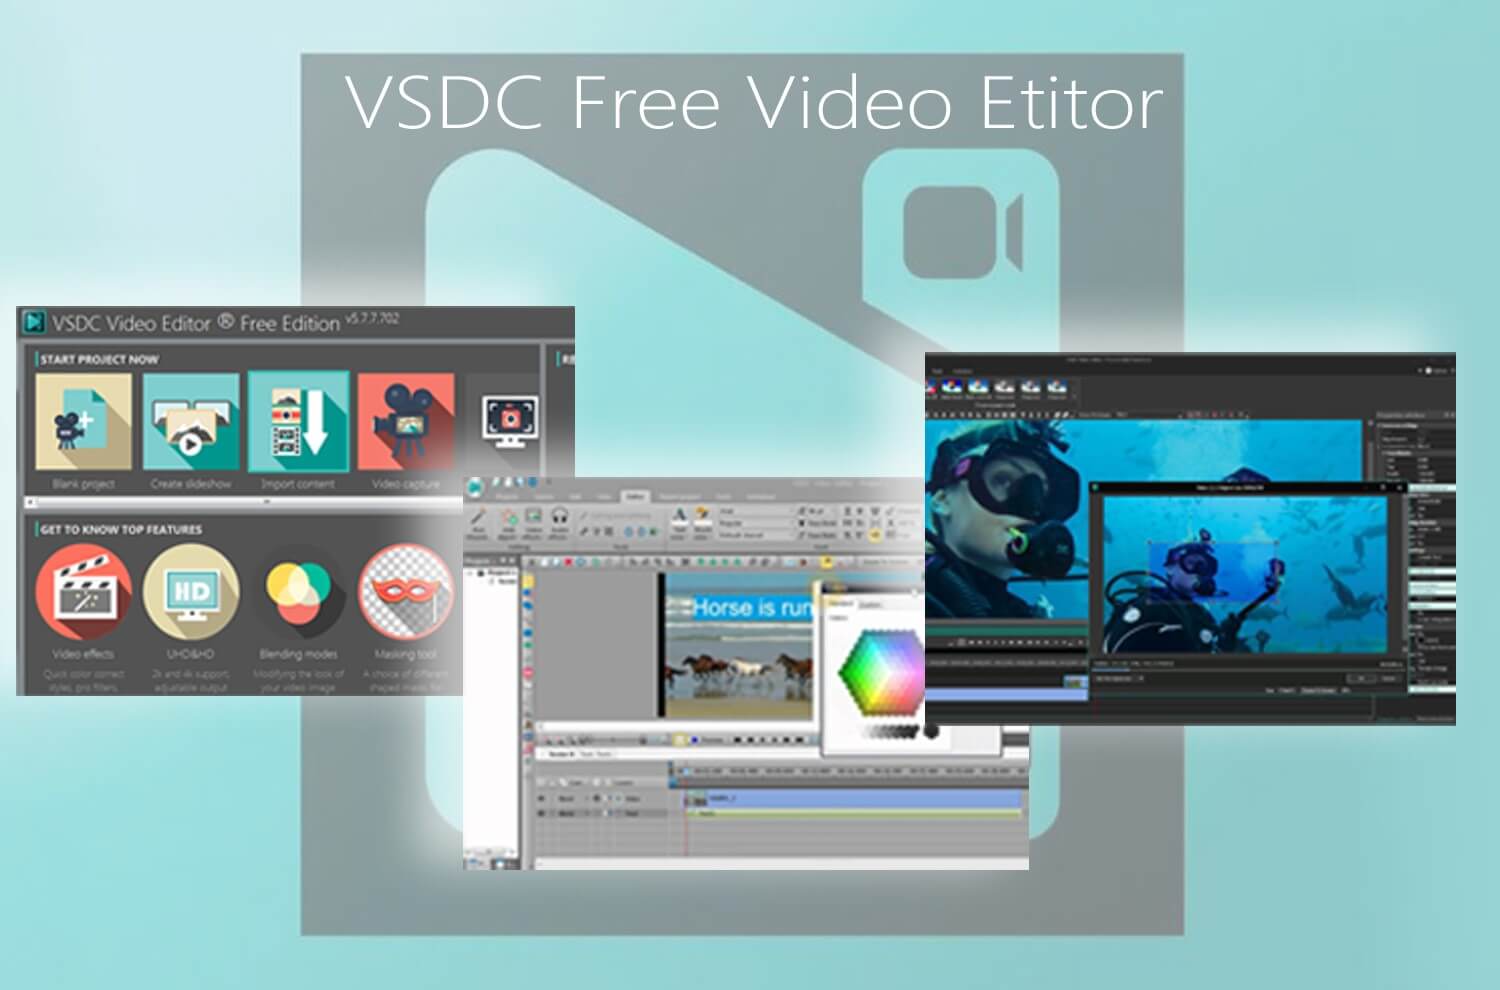 vsdc video editor pro activation key